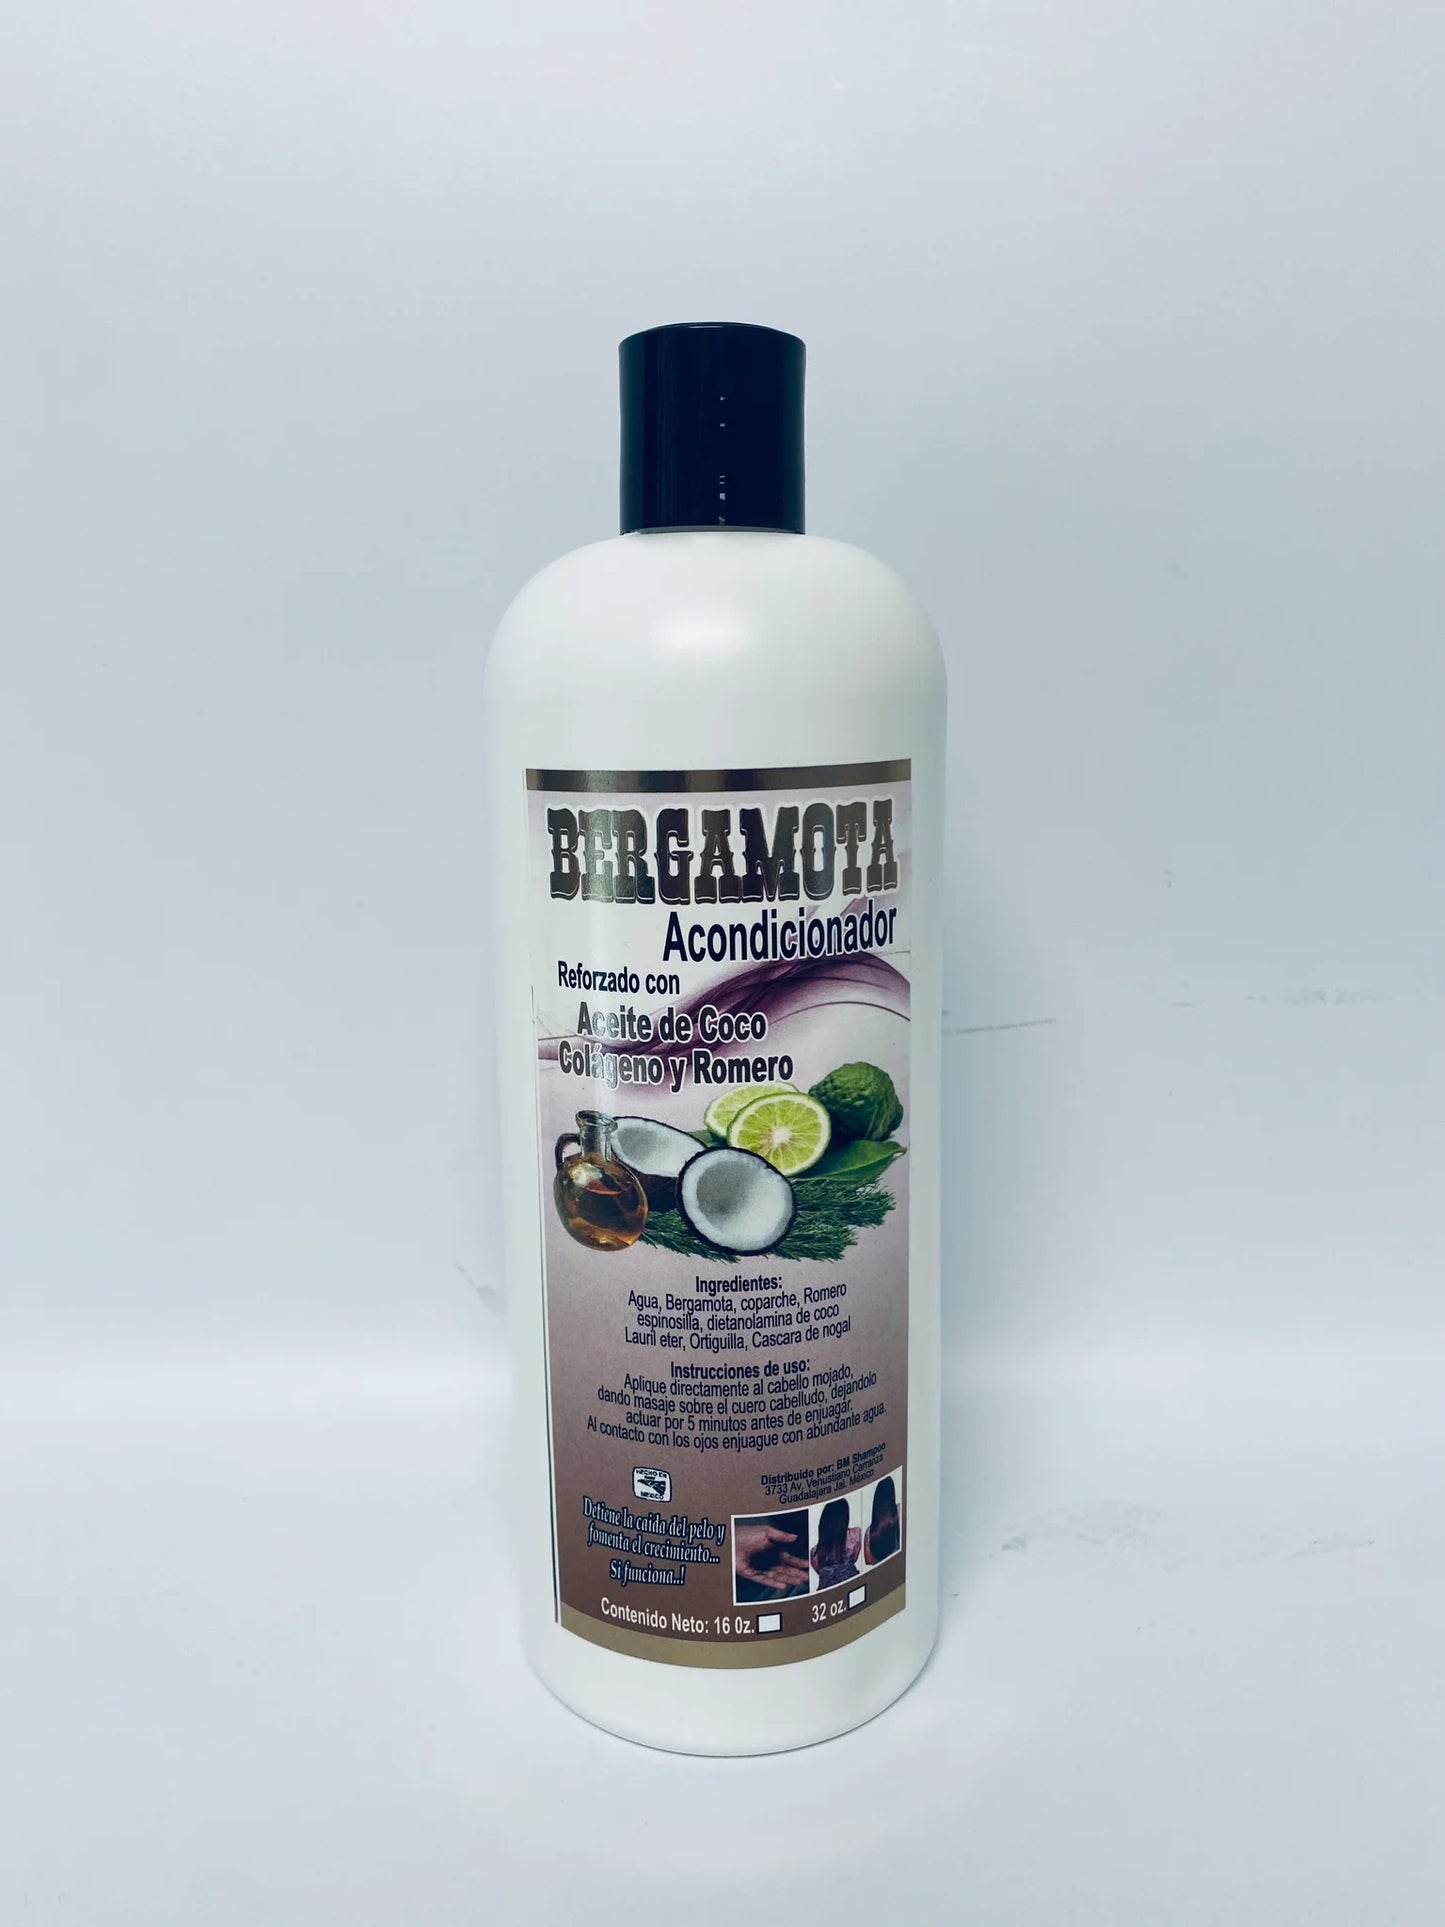 Bergamota Conditioner with Coconut oil